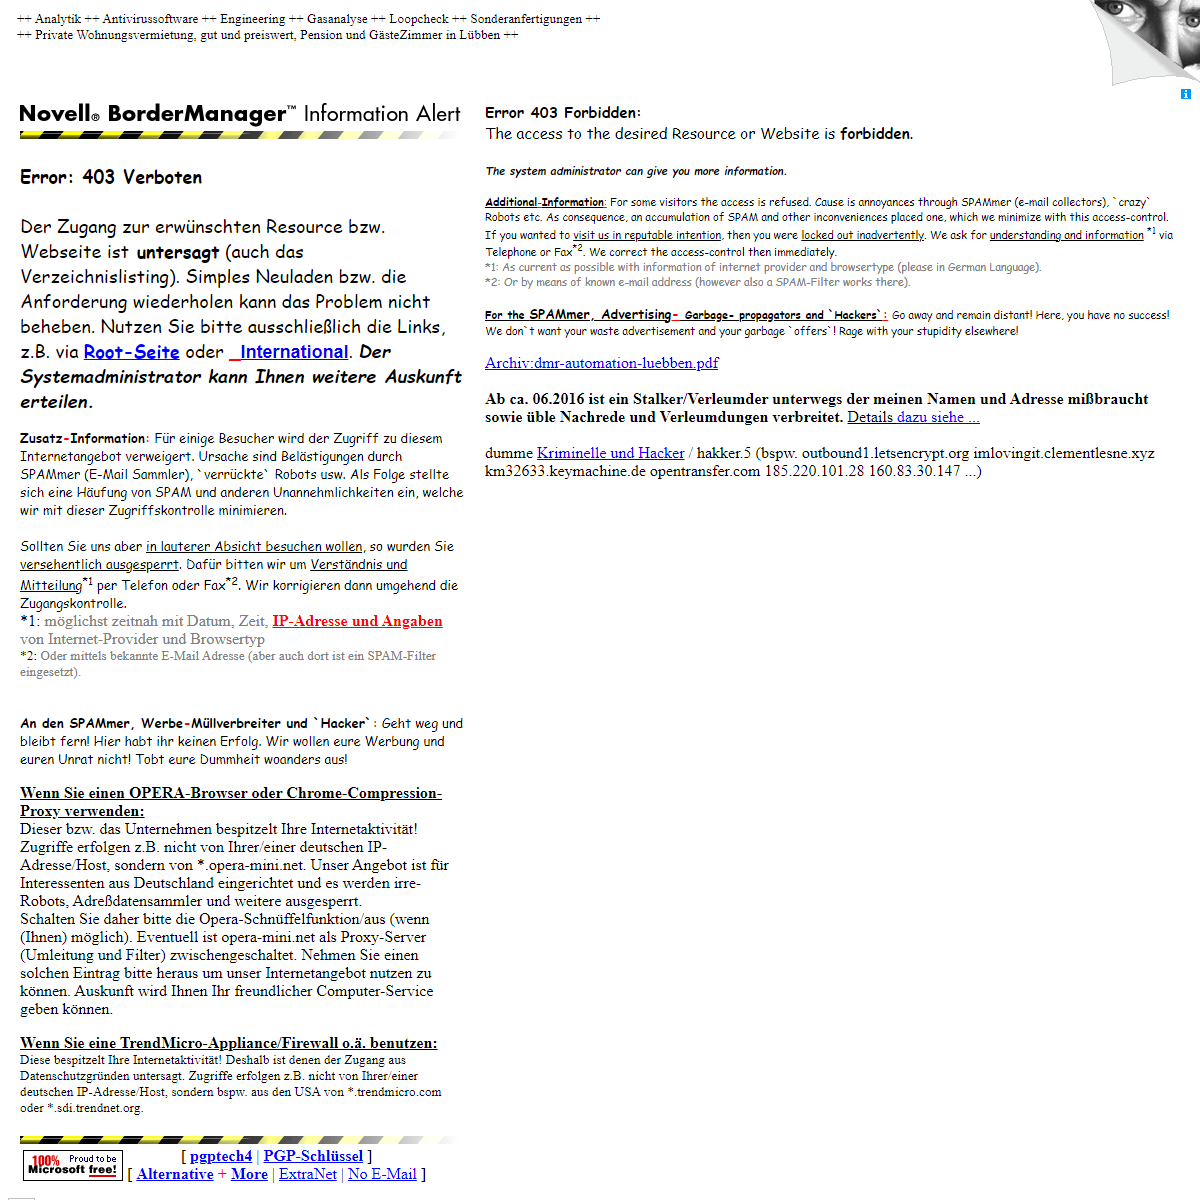 A complete backup of http://dmr-automation.de/budichorg/public/hakker6.htm